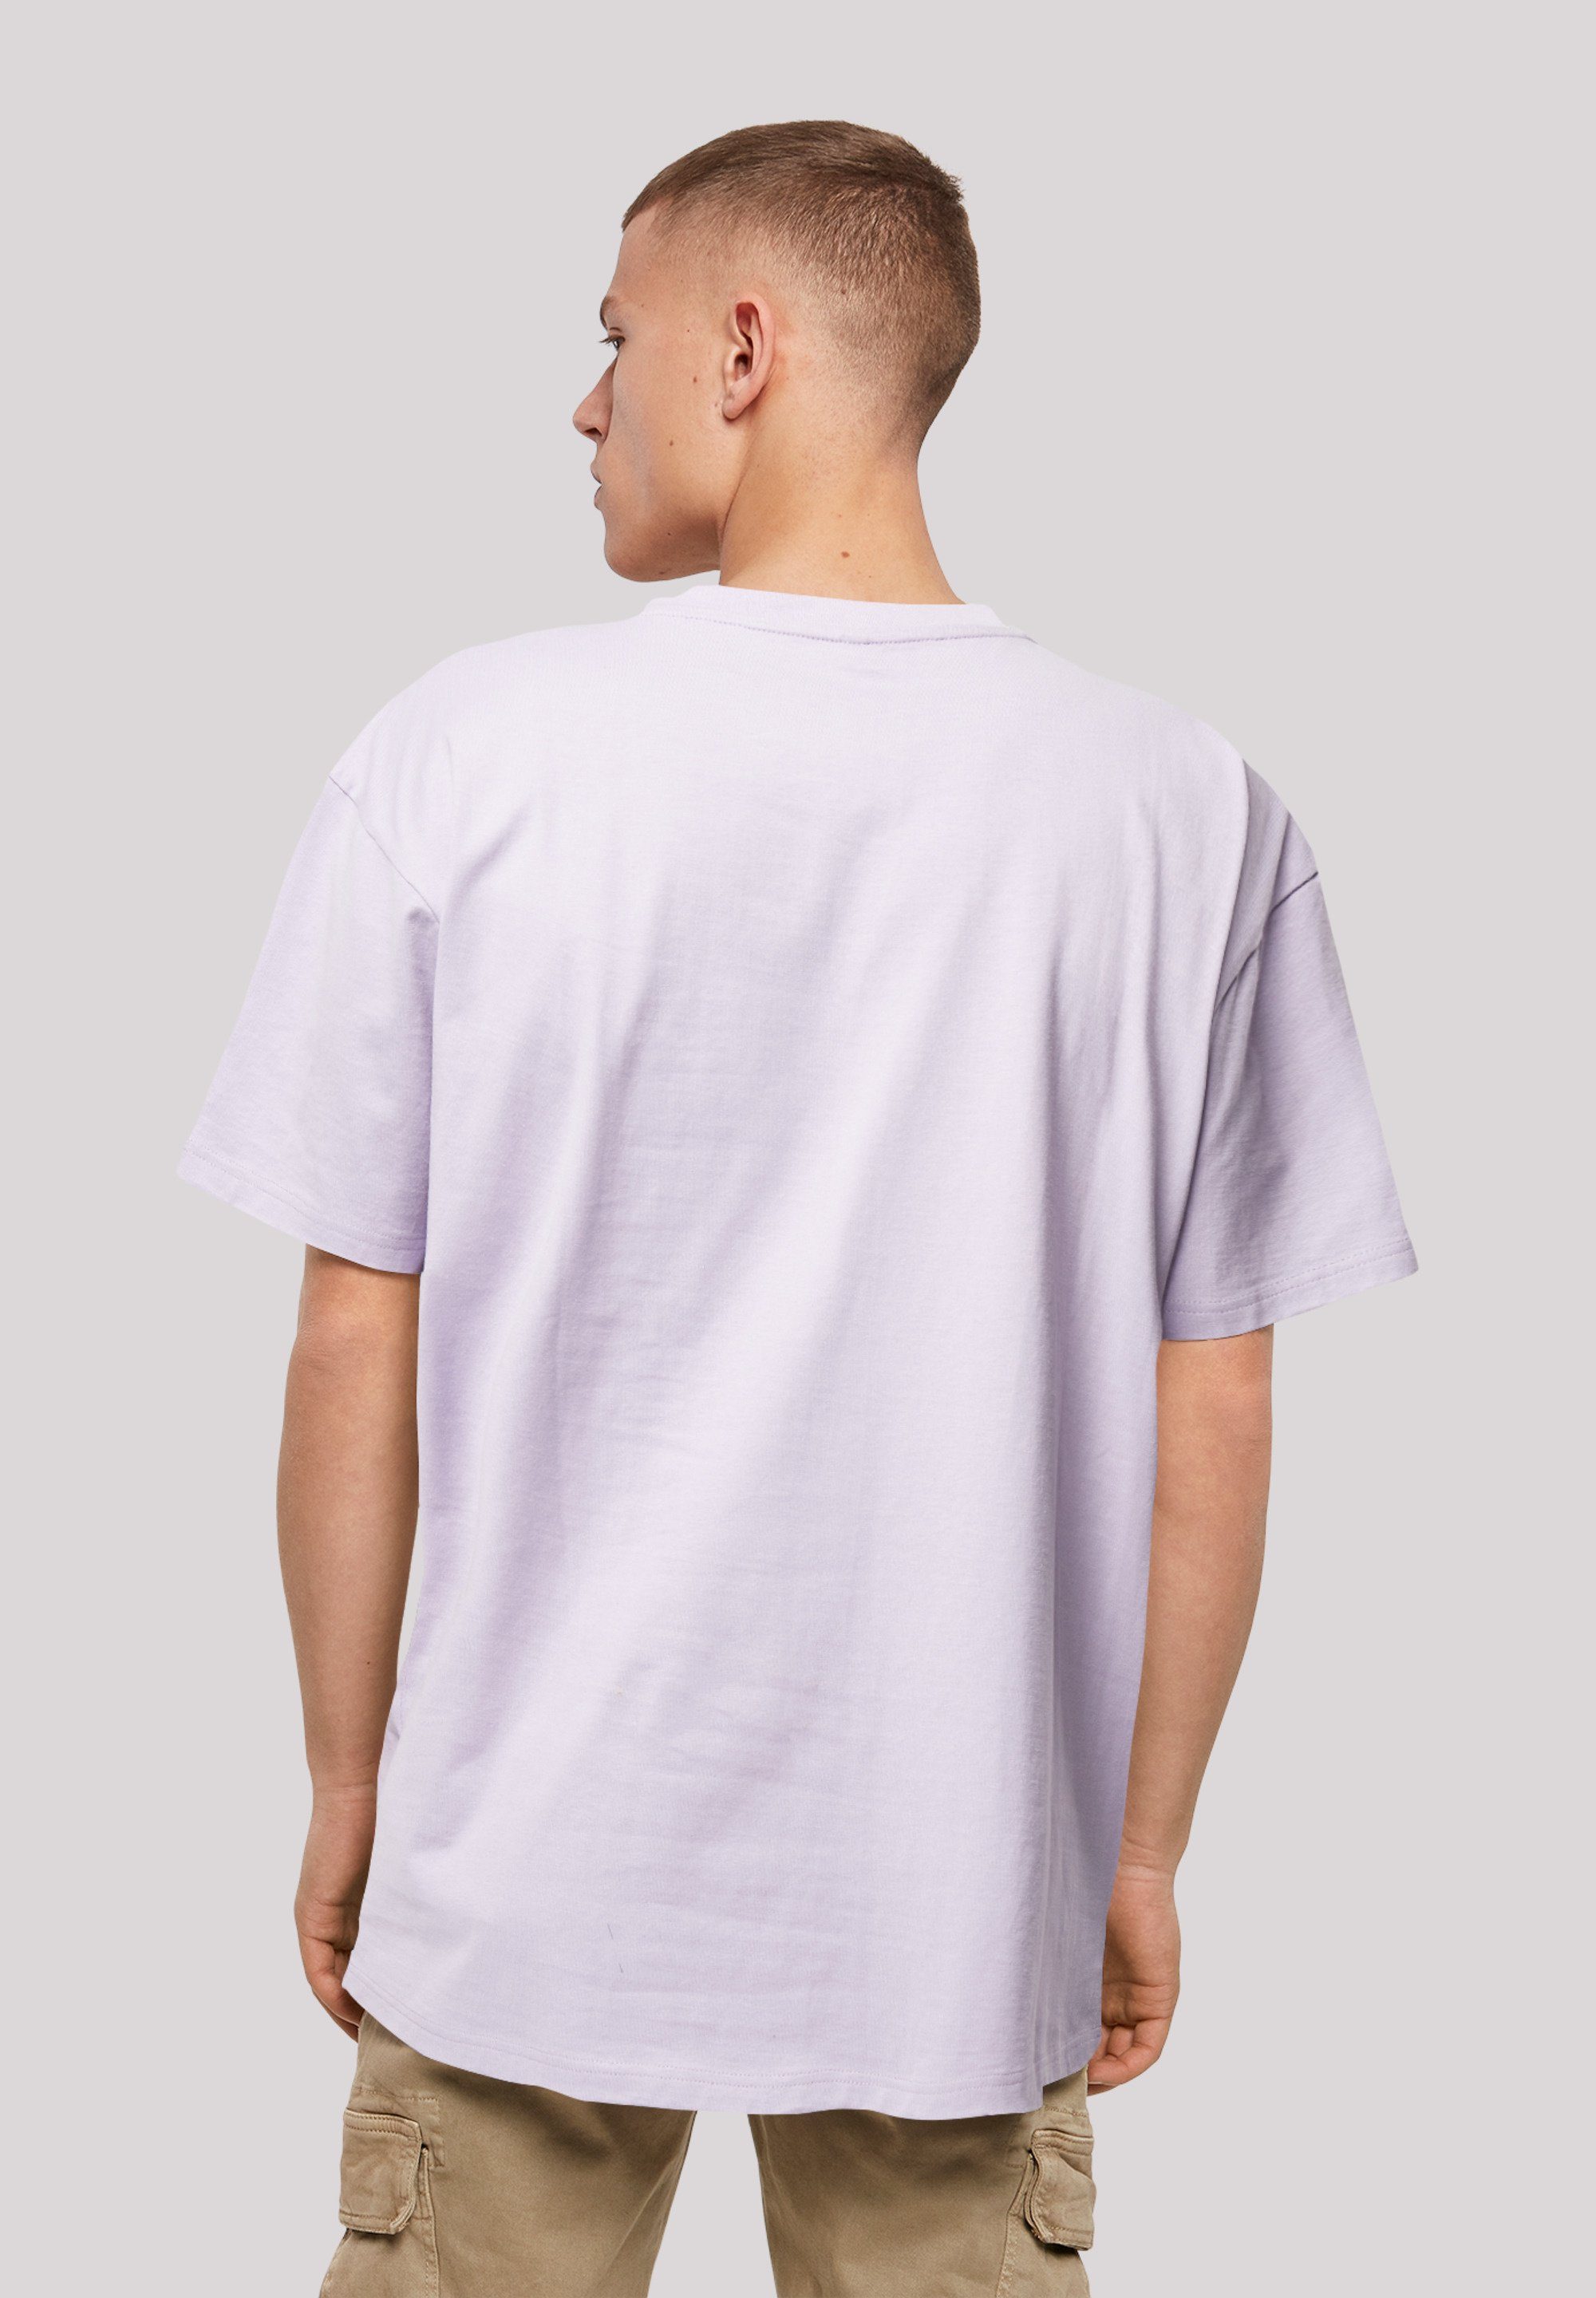 Print T-Shirt MicroProse F4NT4STIC lilac